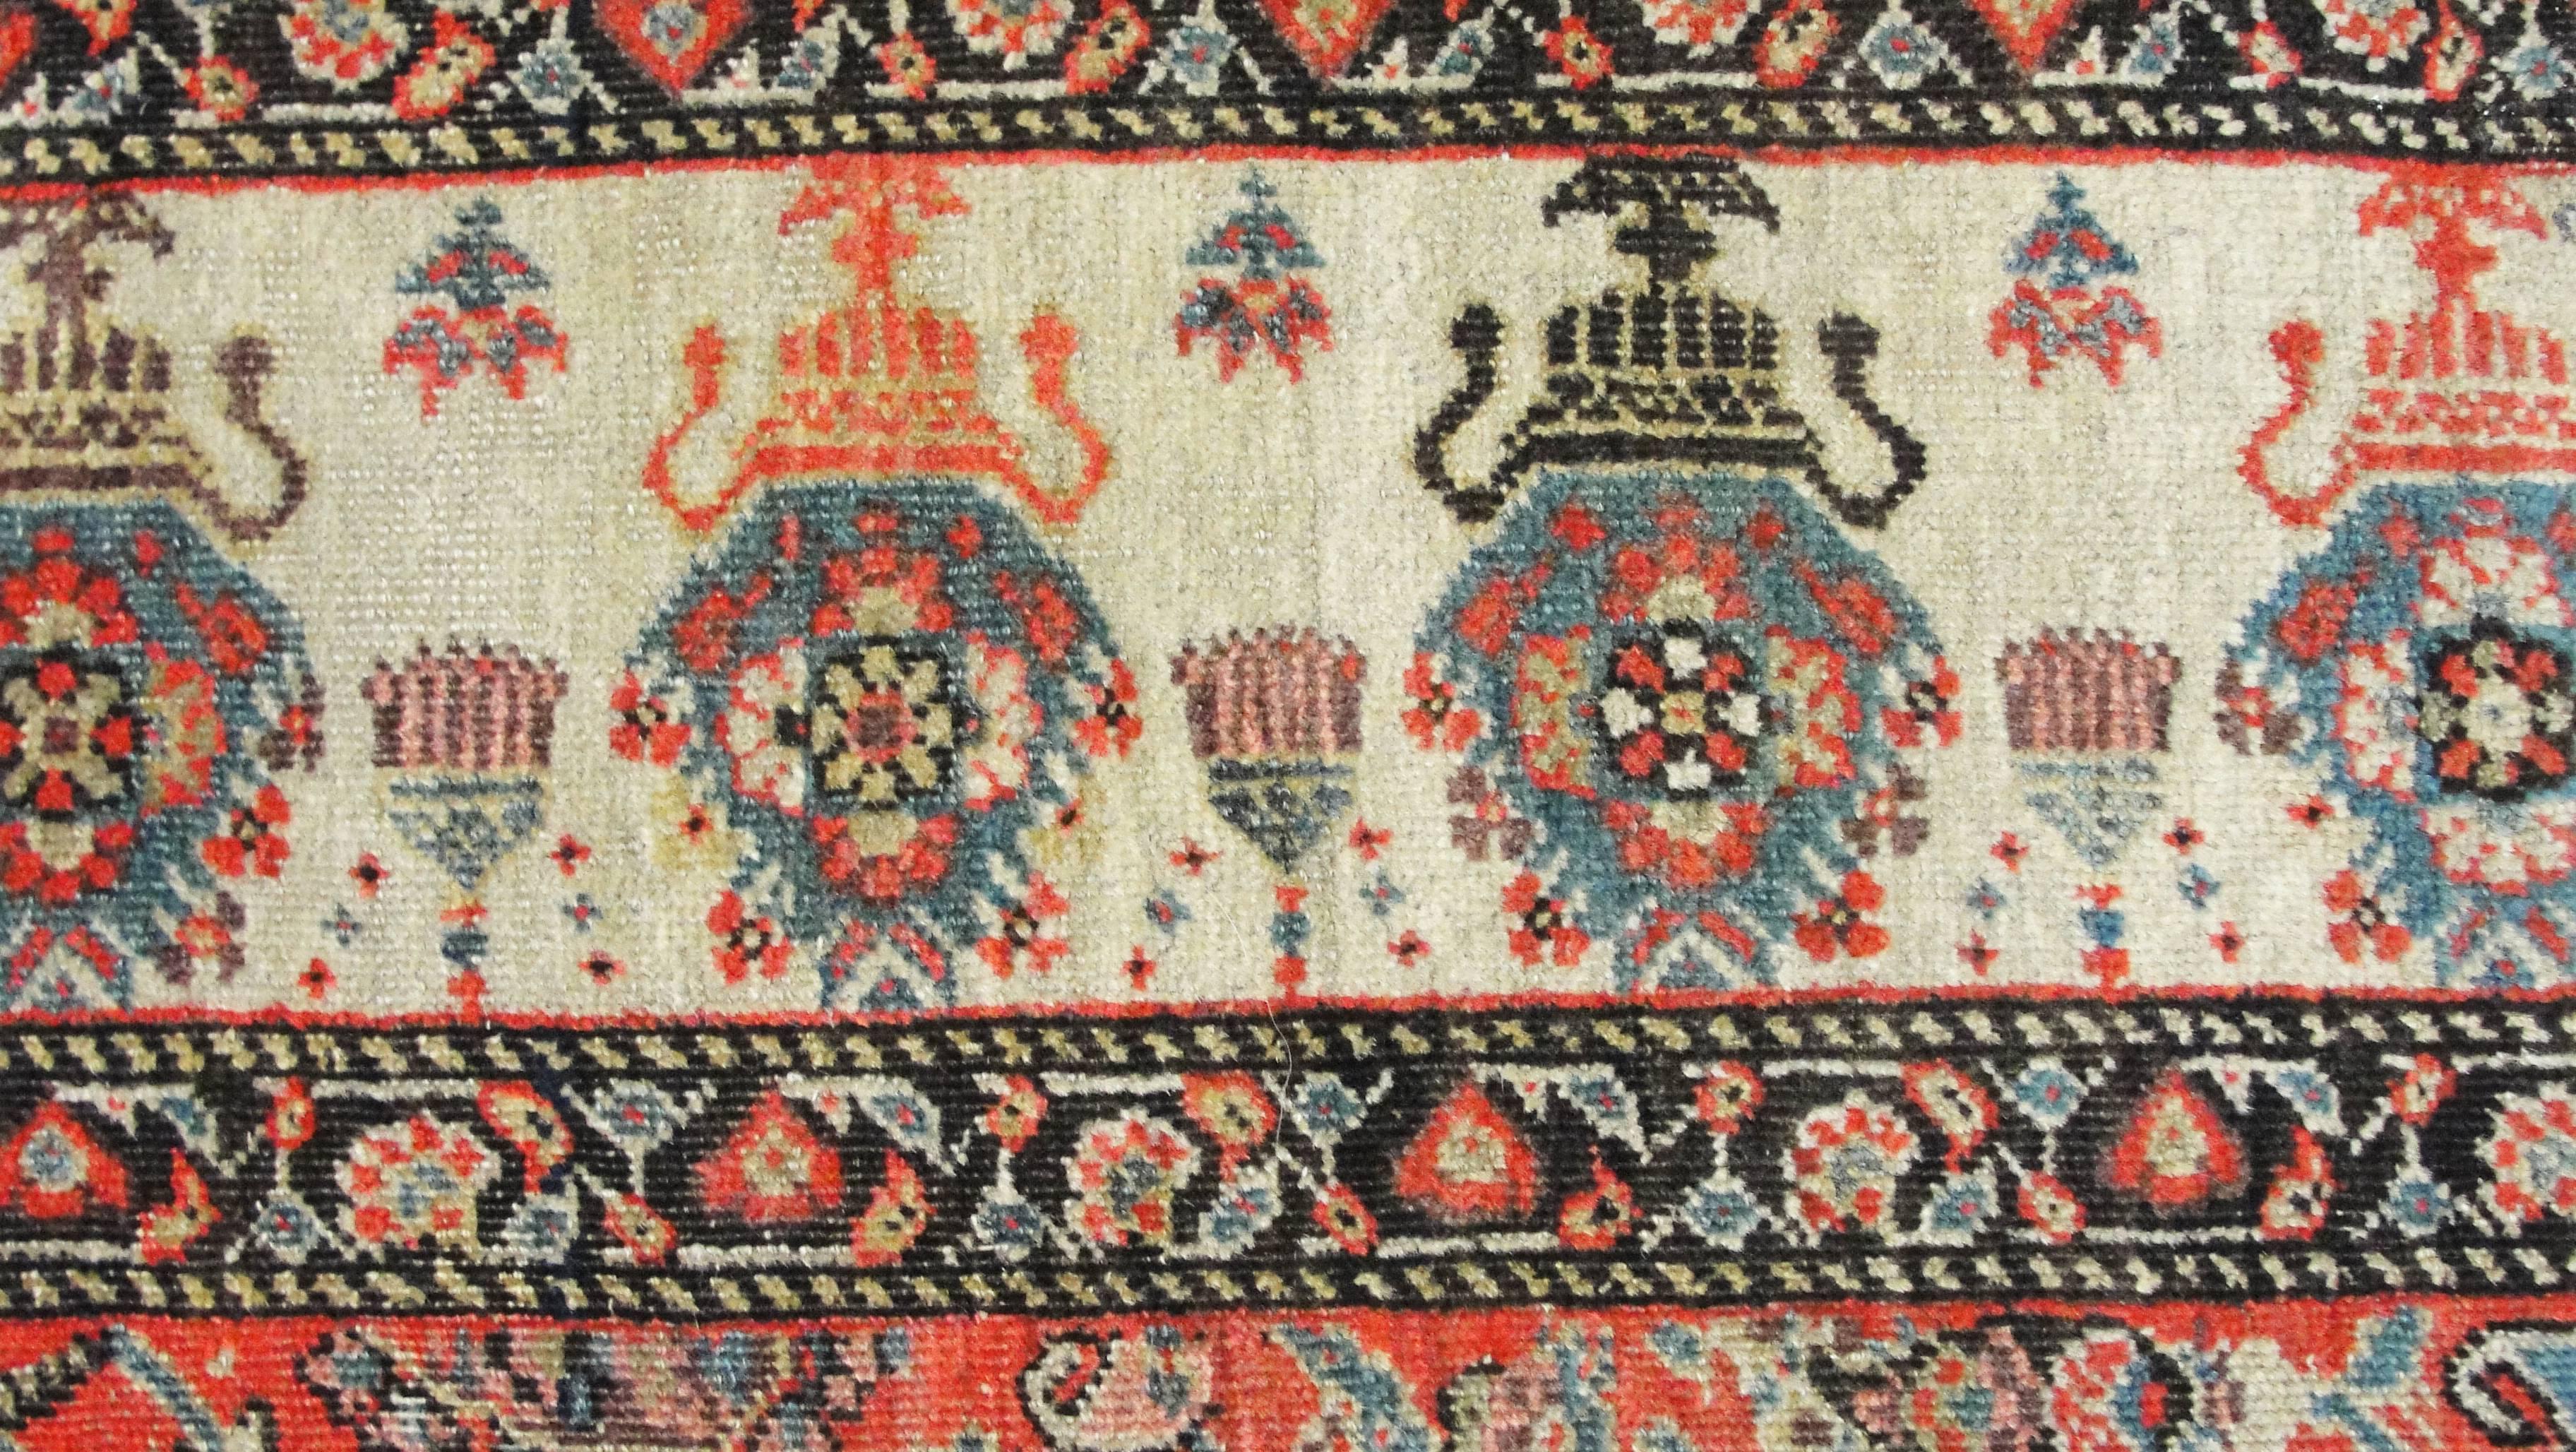 Hand-Woven Antique Persian Zel-I-Sultan Rug, 4' x 6'7